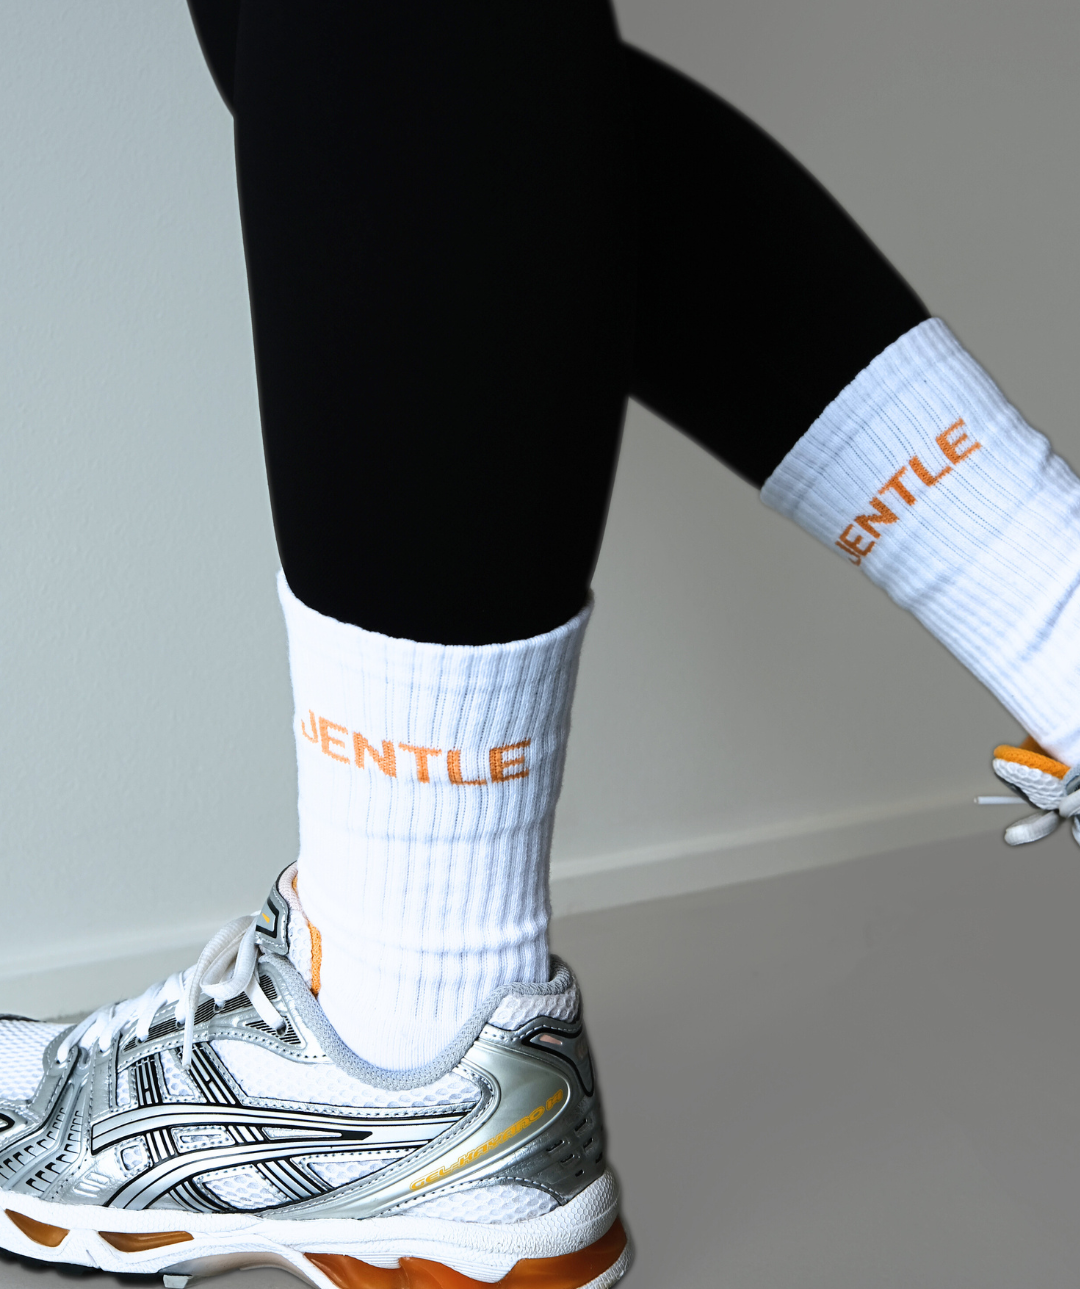 Jentle - Birthday Socks (Orange)